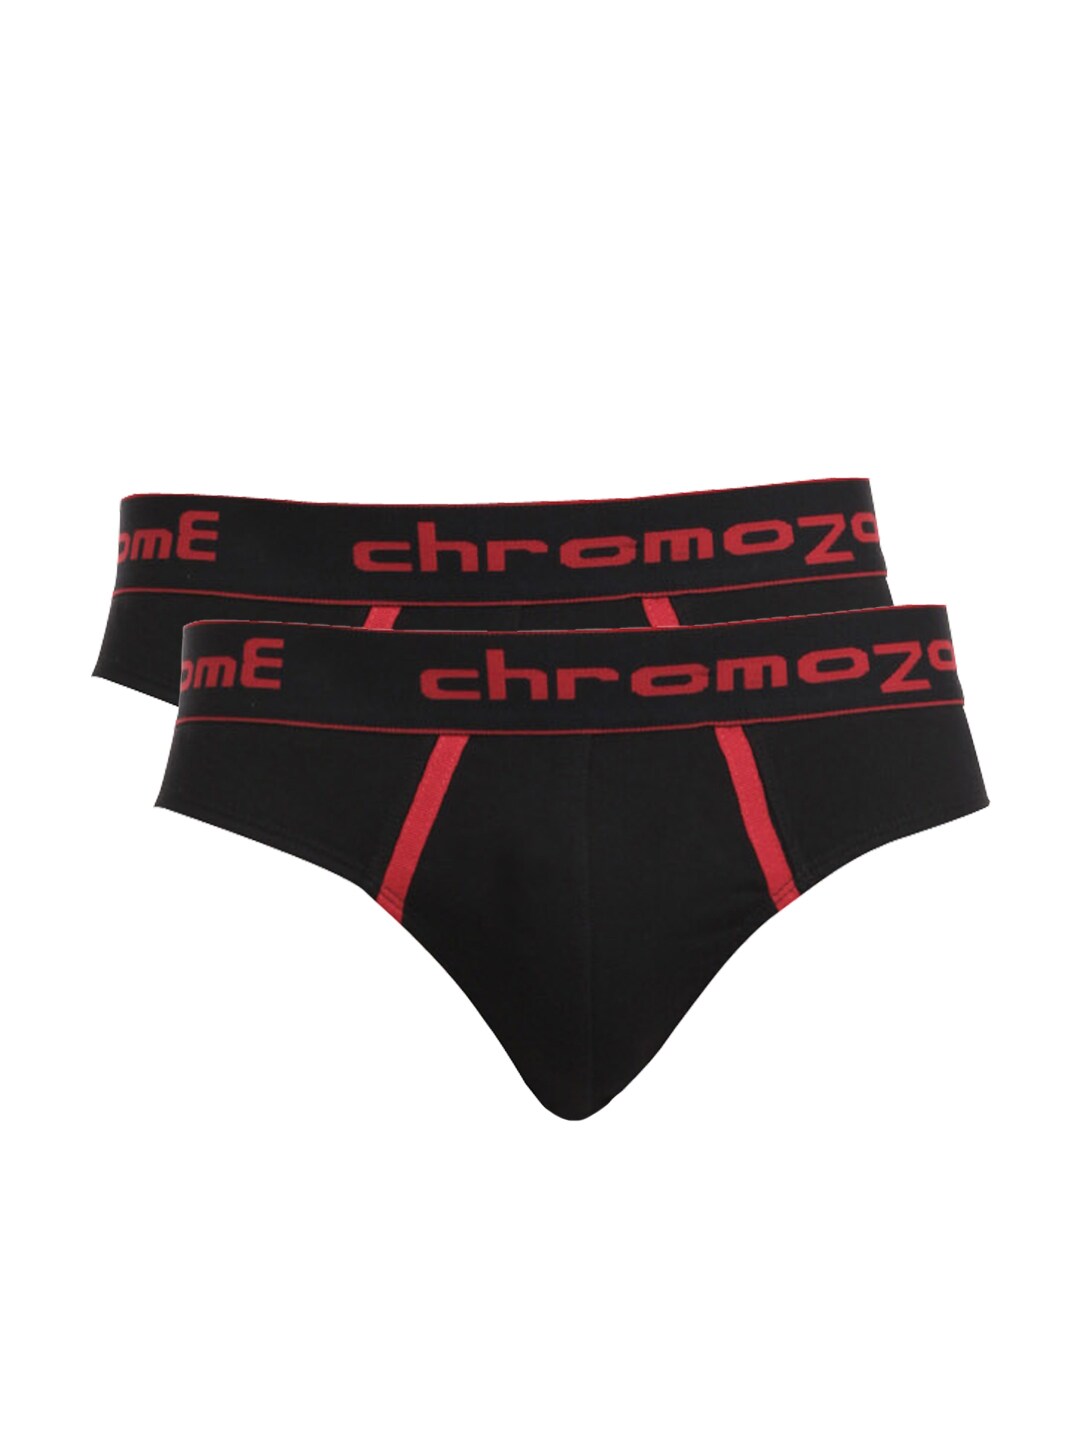 Chromozome Men Black & Red Pack of 2 Briefs